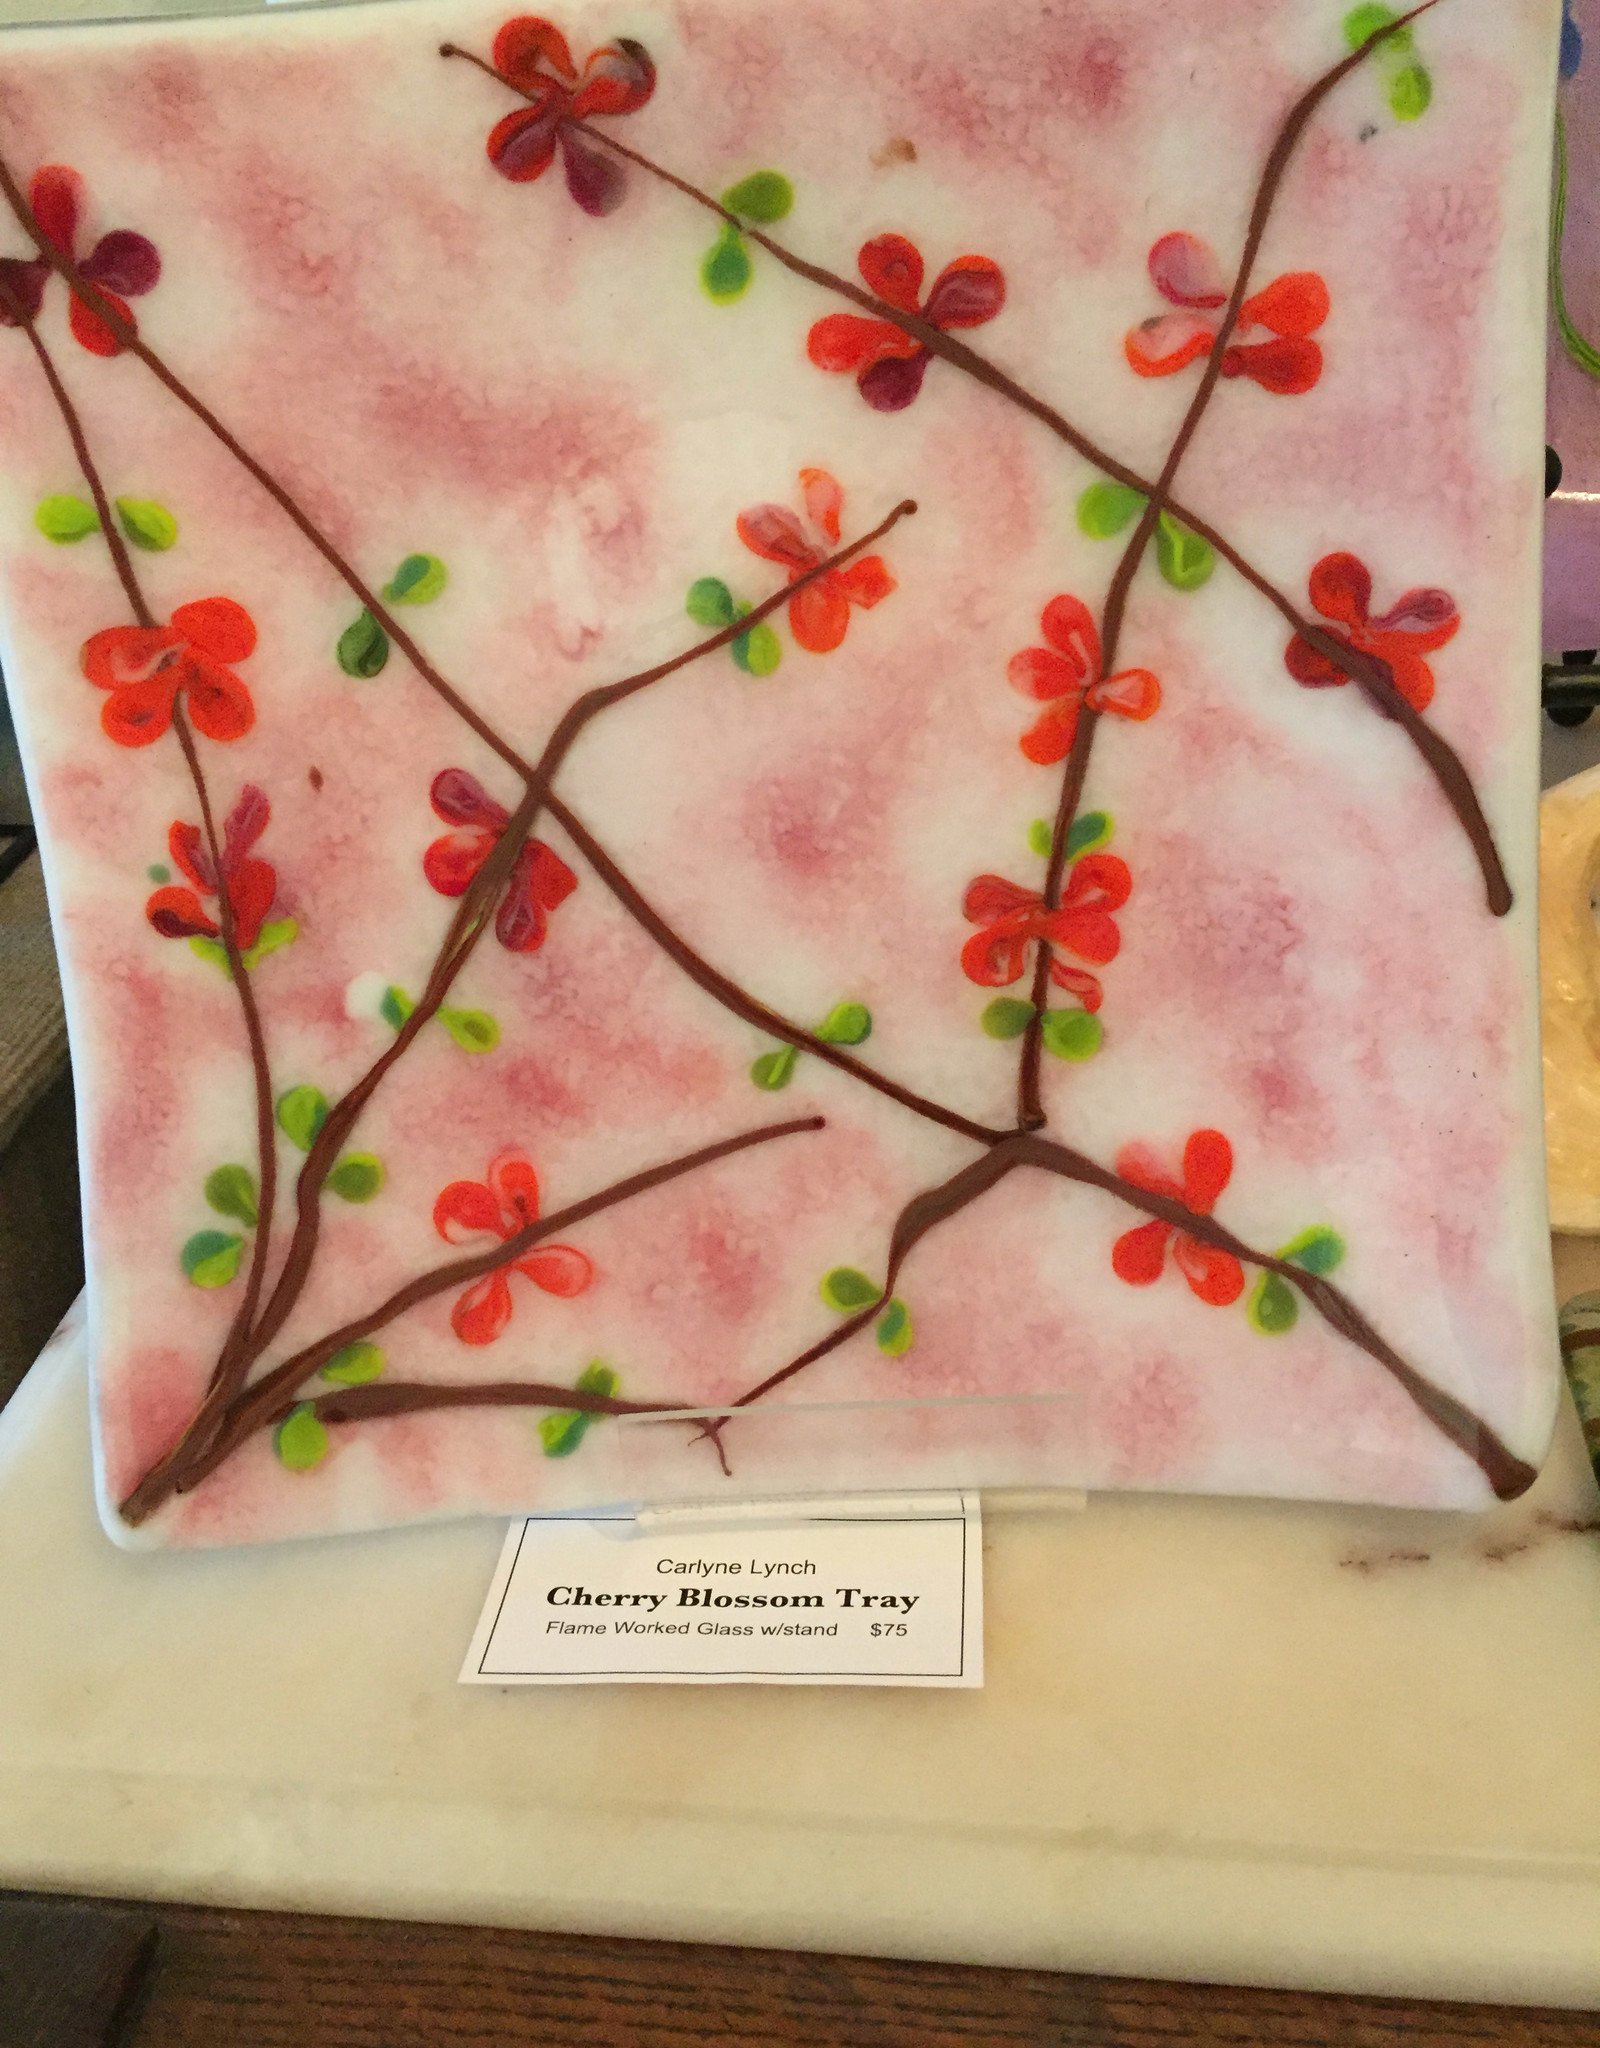 Carlyne Lynch Cherry Blossom Platter